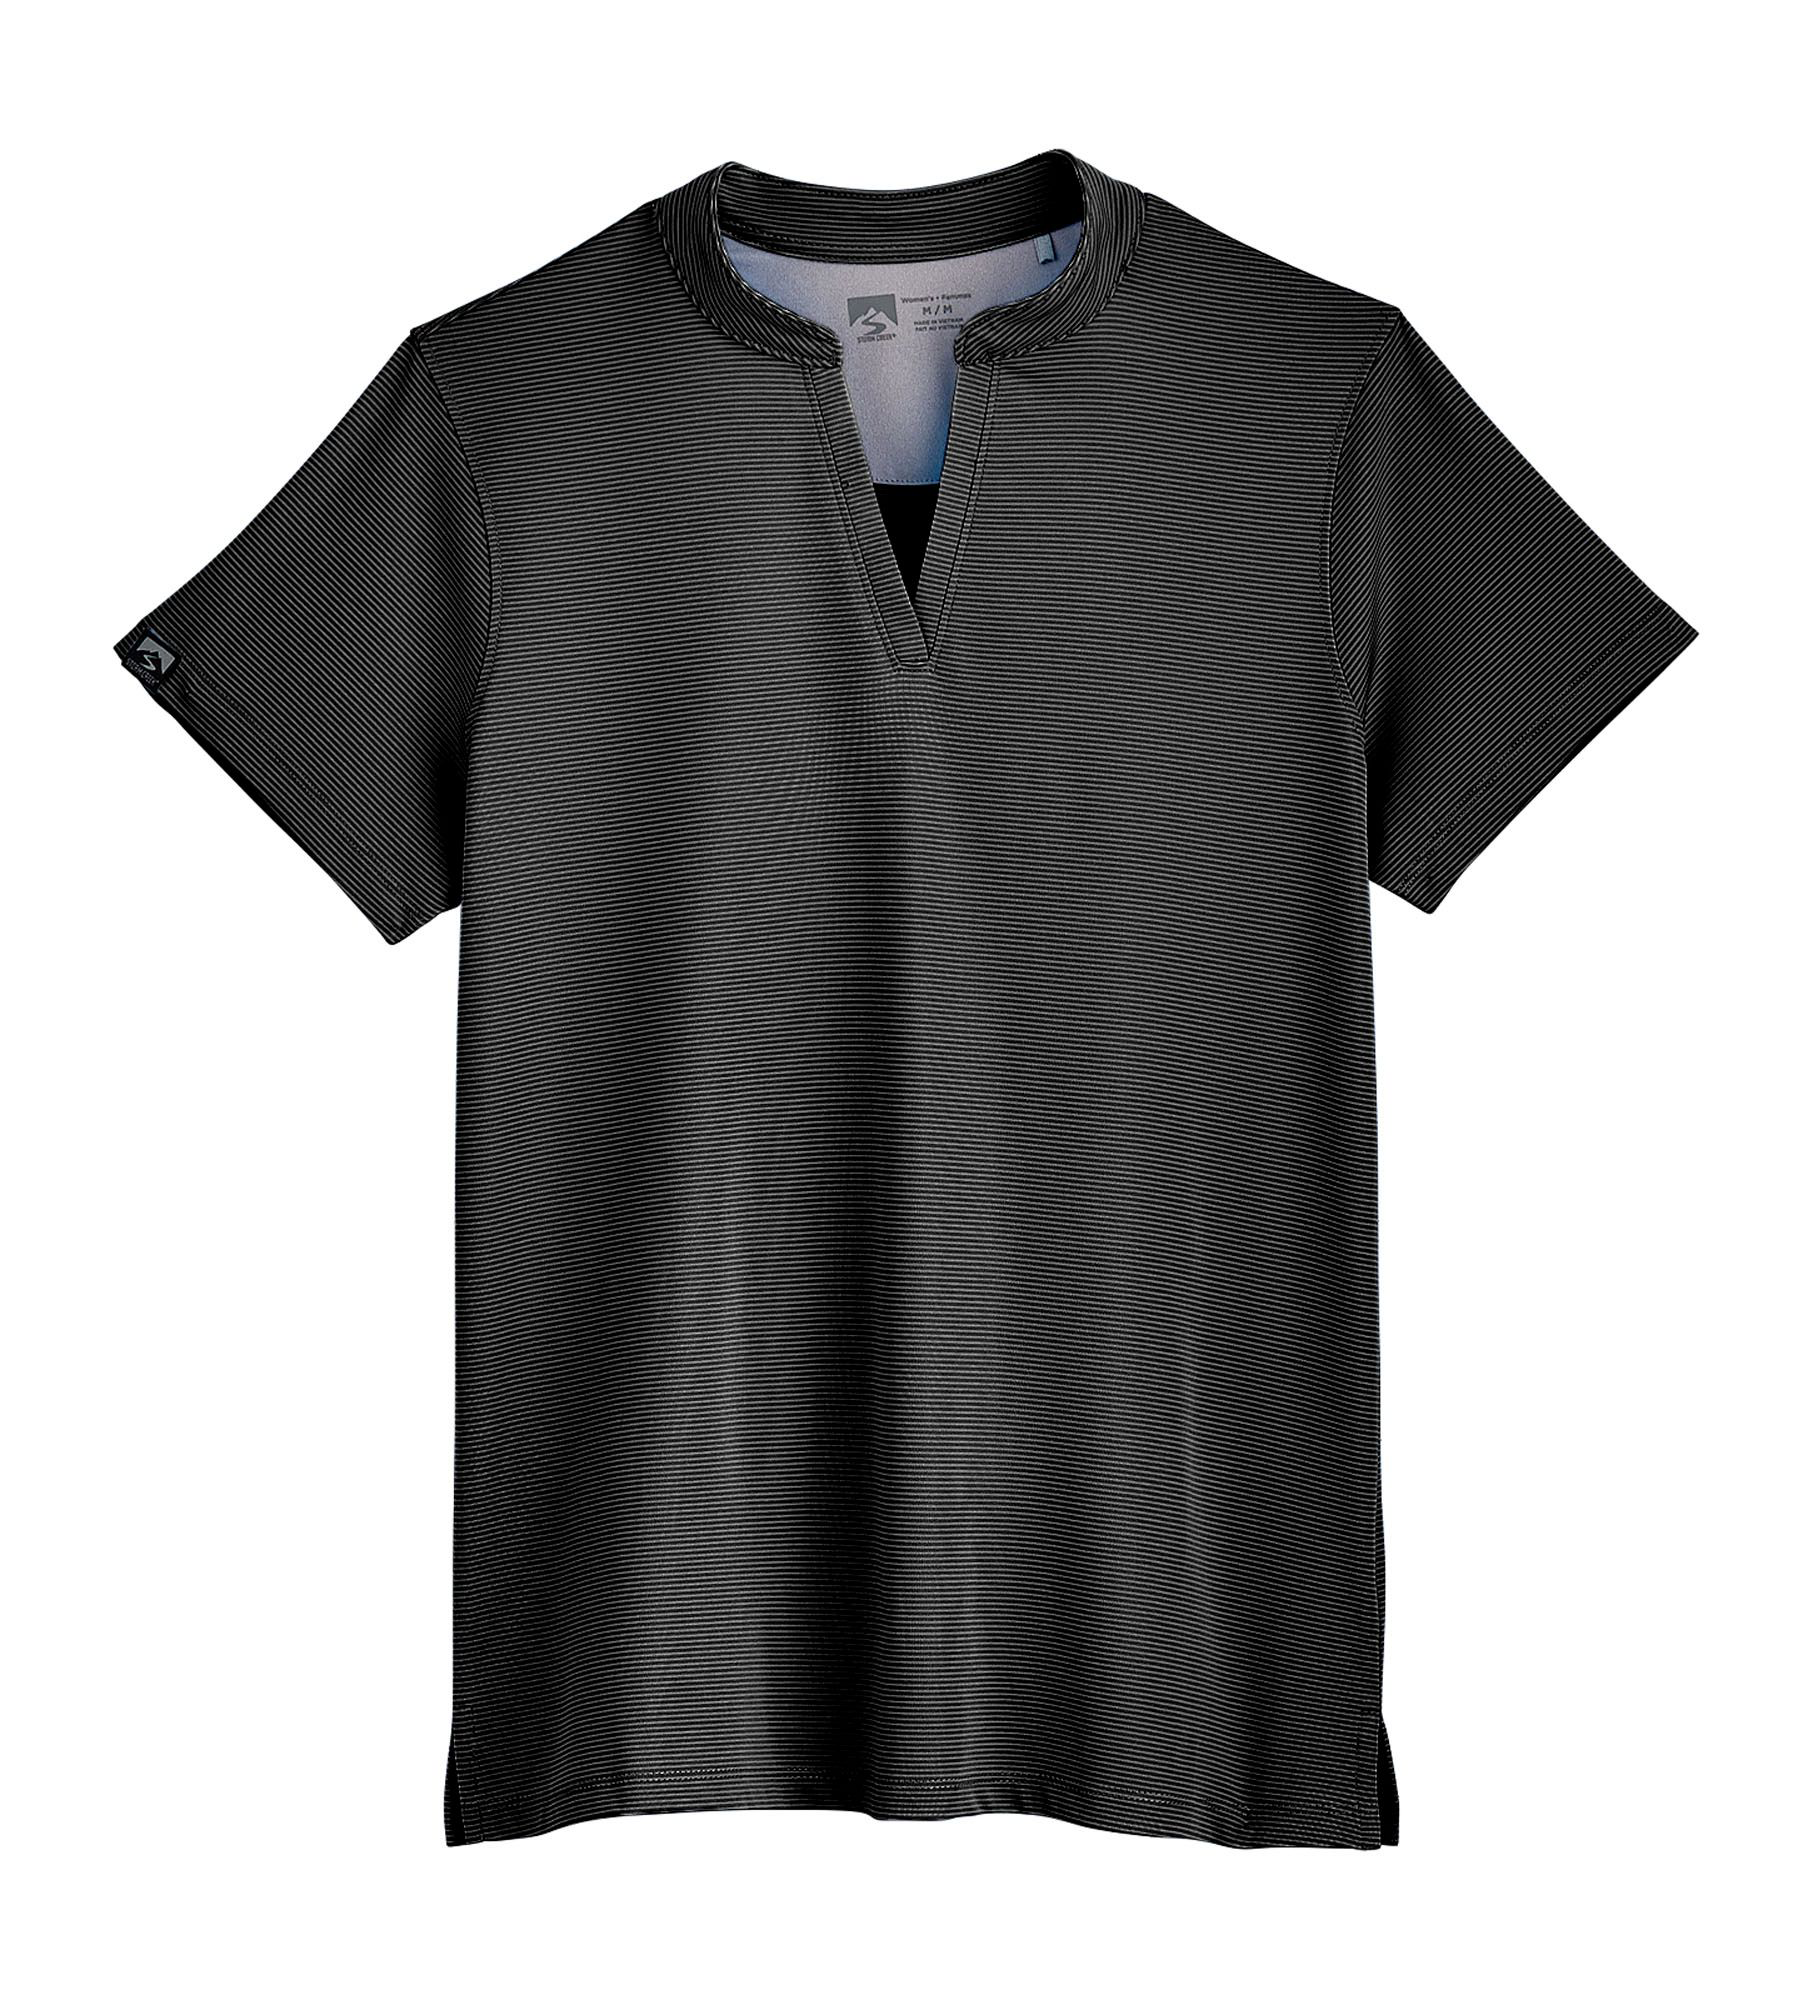 Storm Creek Optimist Short-Sleeve Polo Shirt for Ladies - Black - XS